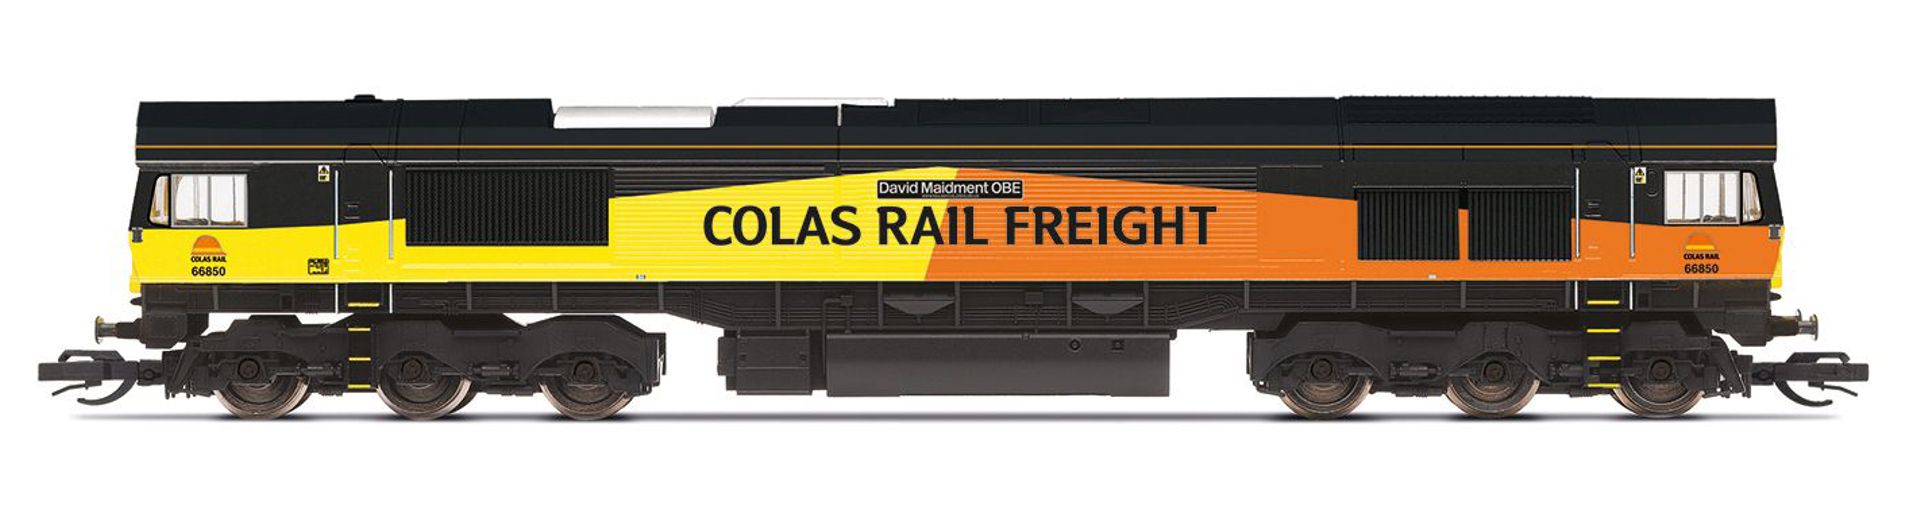 Hornby TT3019M - Colas Rail, Class 66, Co-Co, 66850, 'David Maidment OBE', Ep.VI